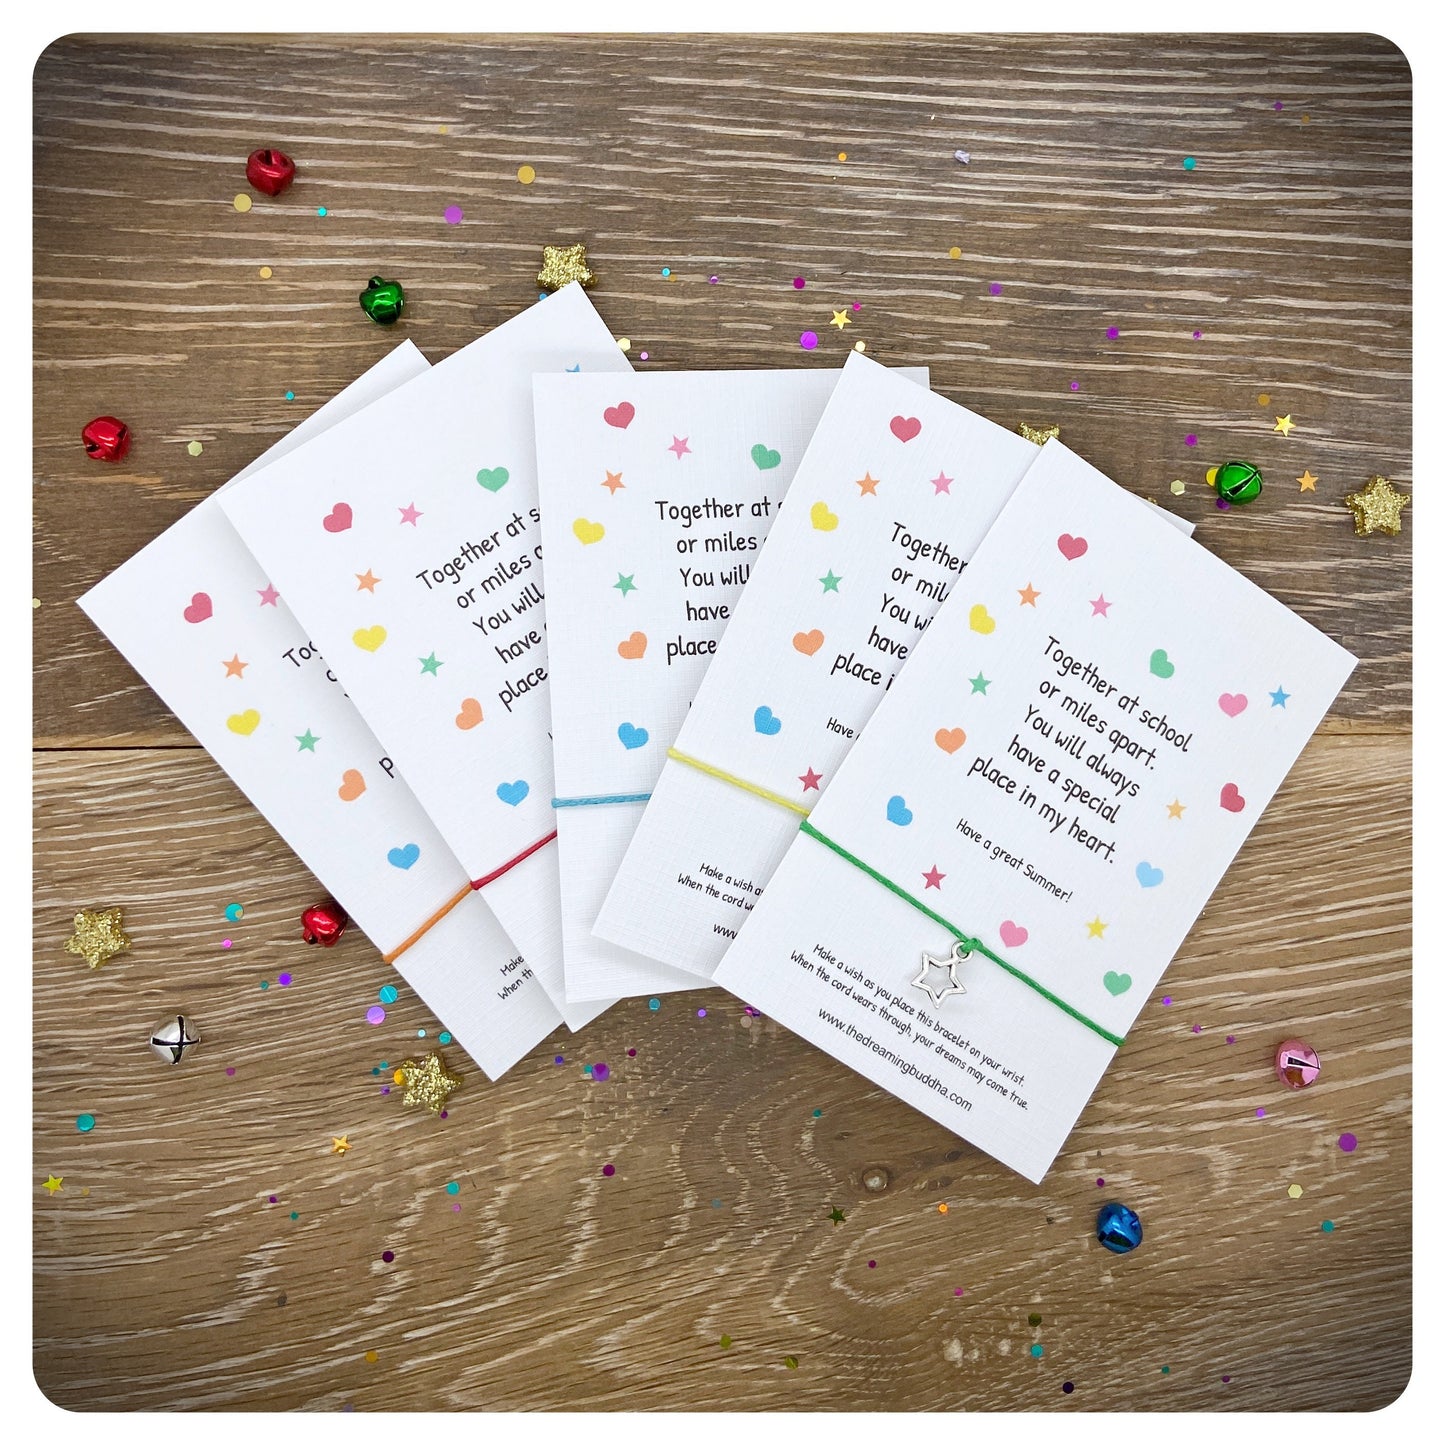 Pack Of 5 Friendship Wish Bracelets, Friendship Poem Cards Bulk Pack, End Of Term Student Gifts